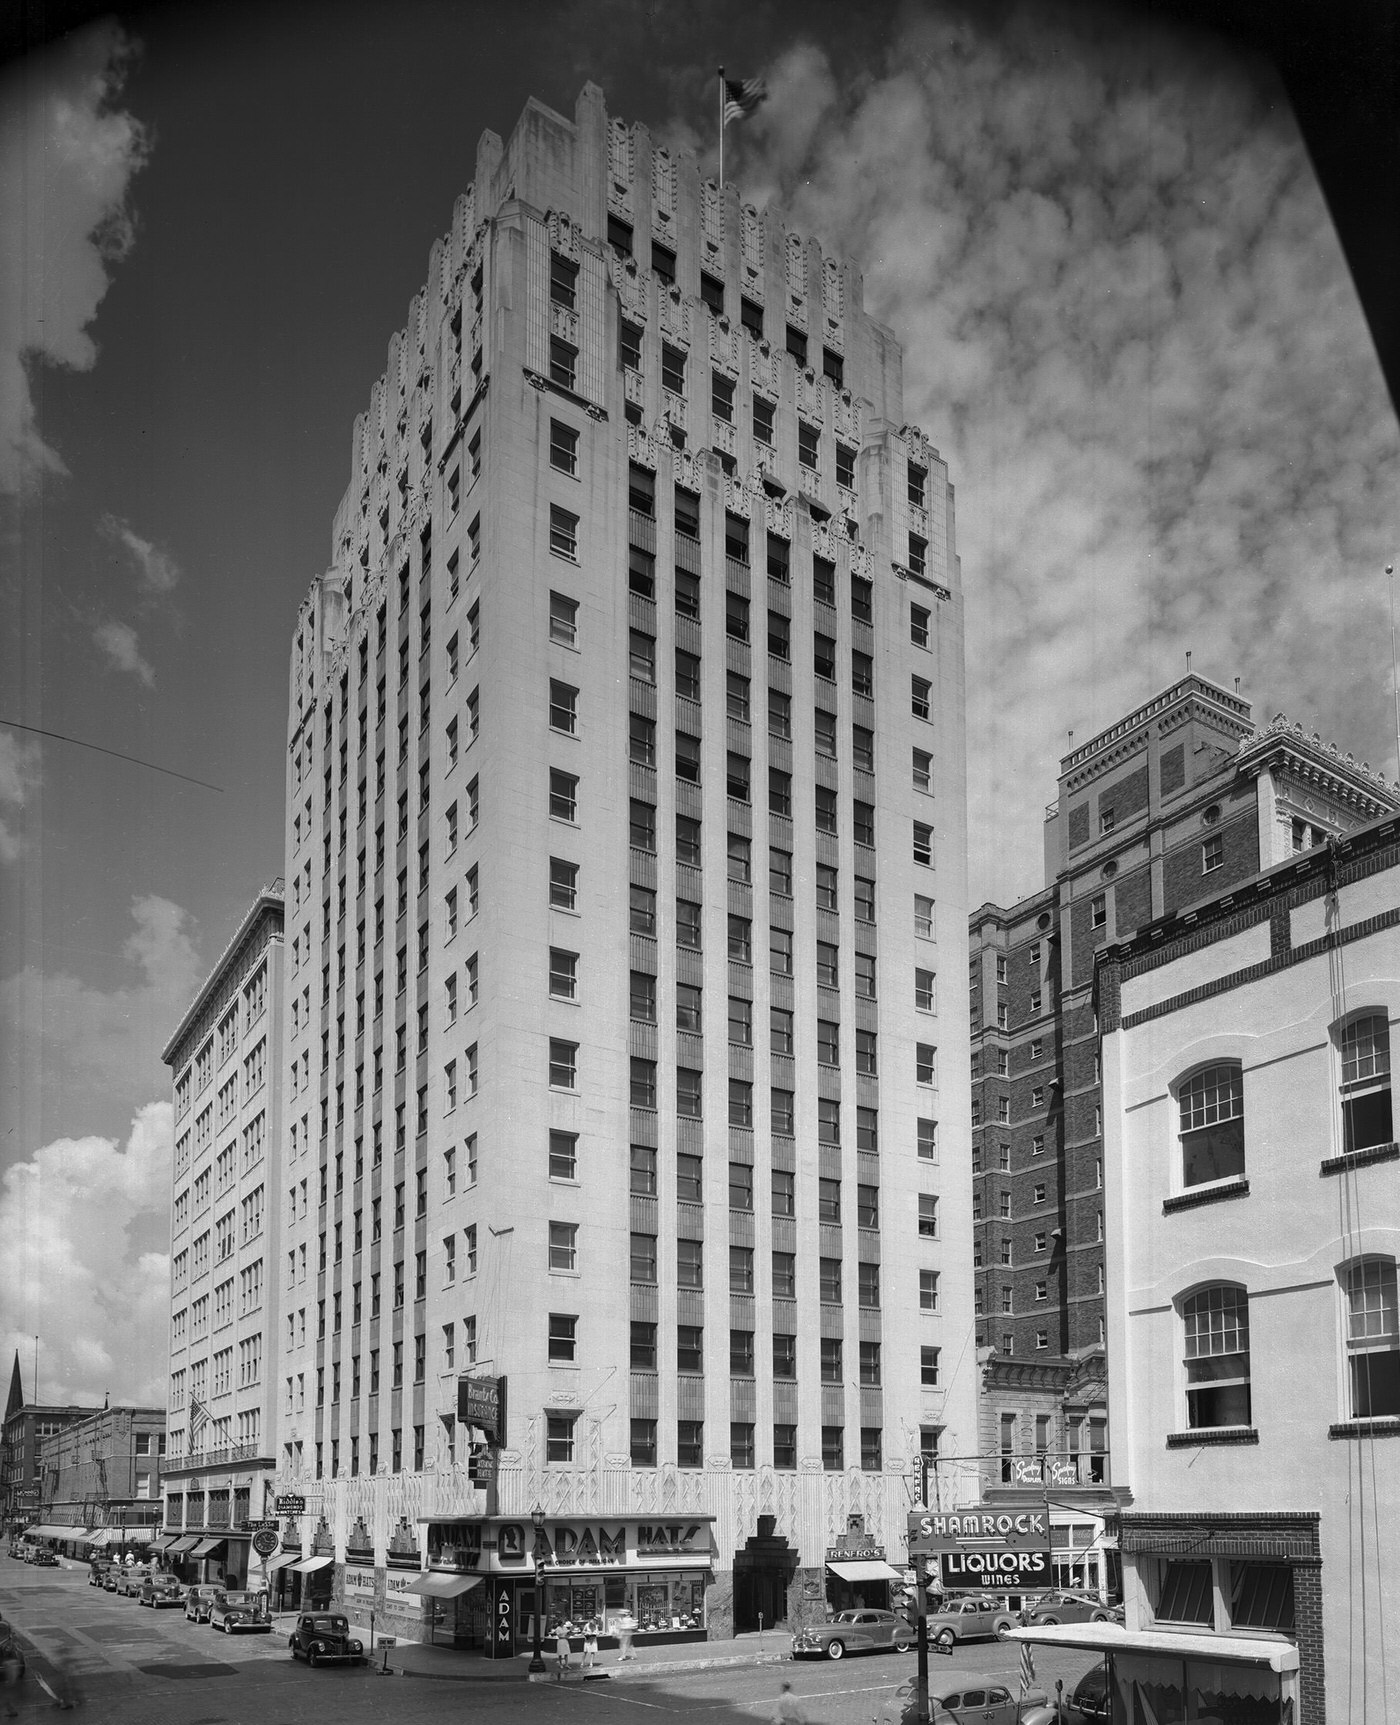 Sinclair building, 512 Main Street, downtown Fort Worth, Texas, 1945